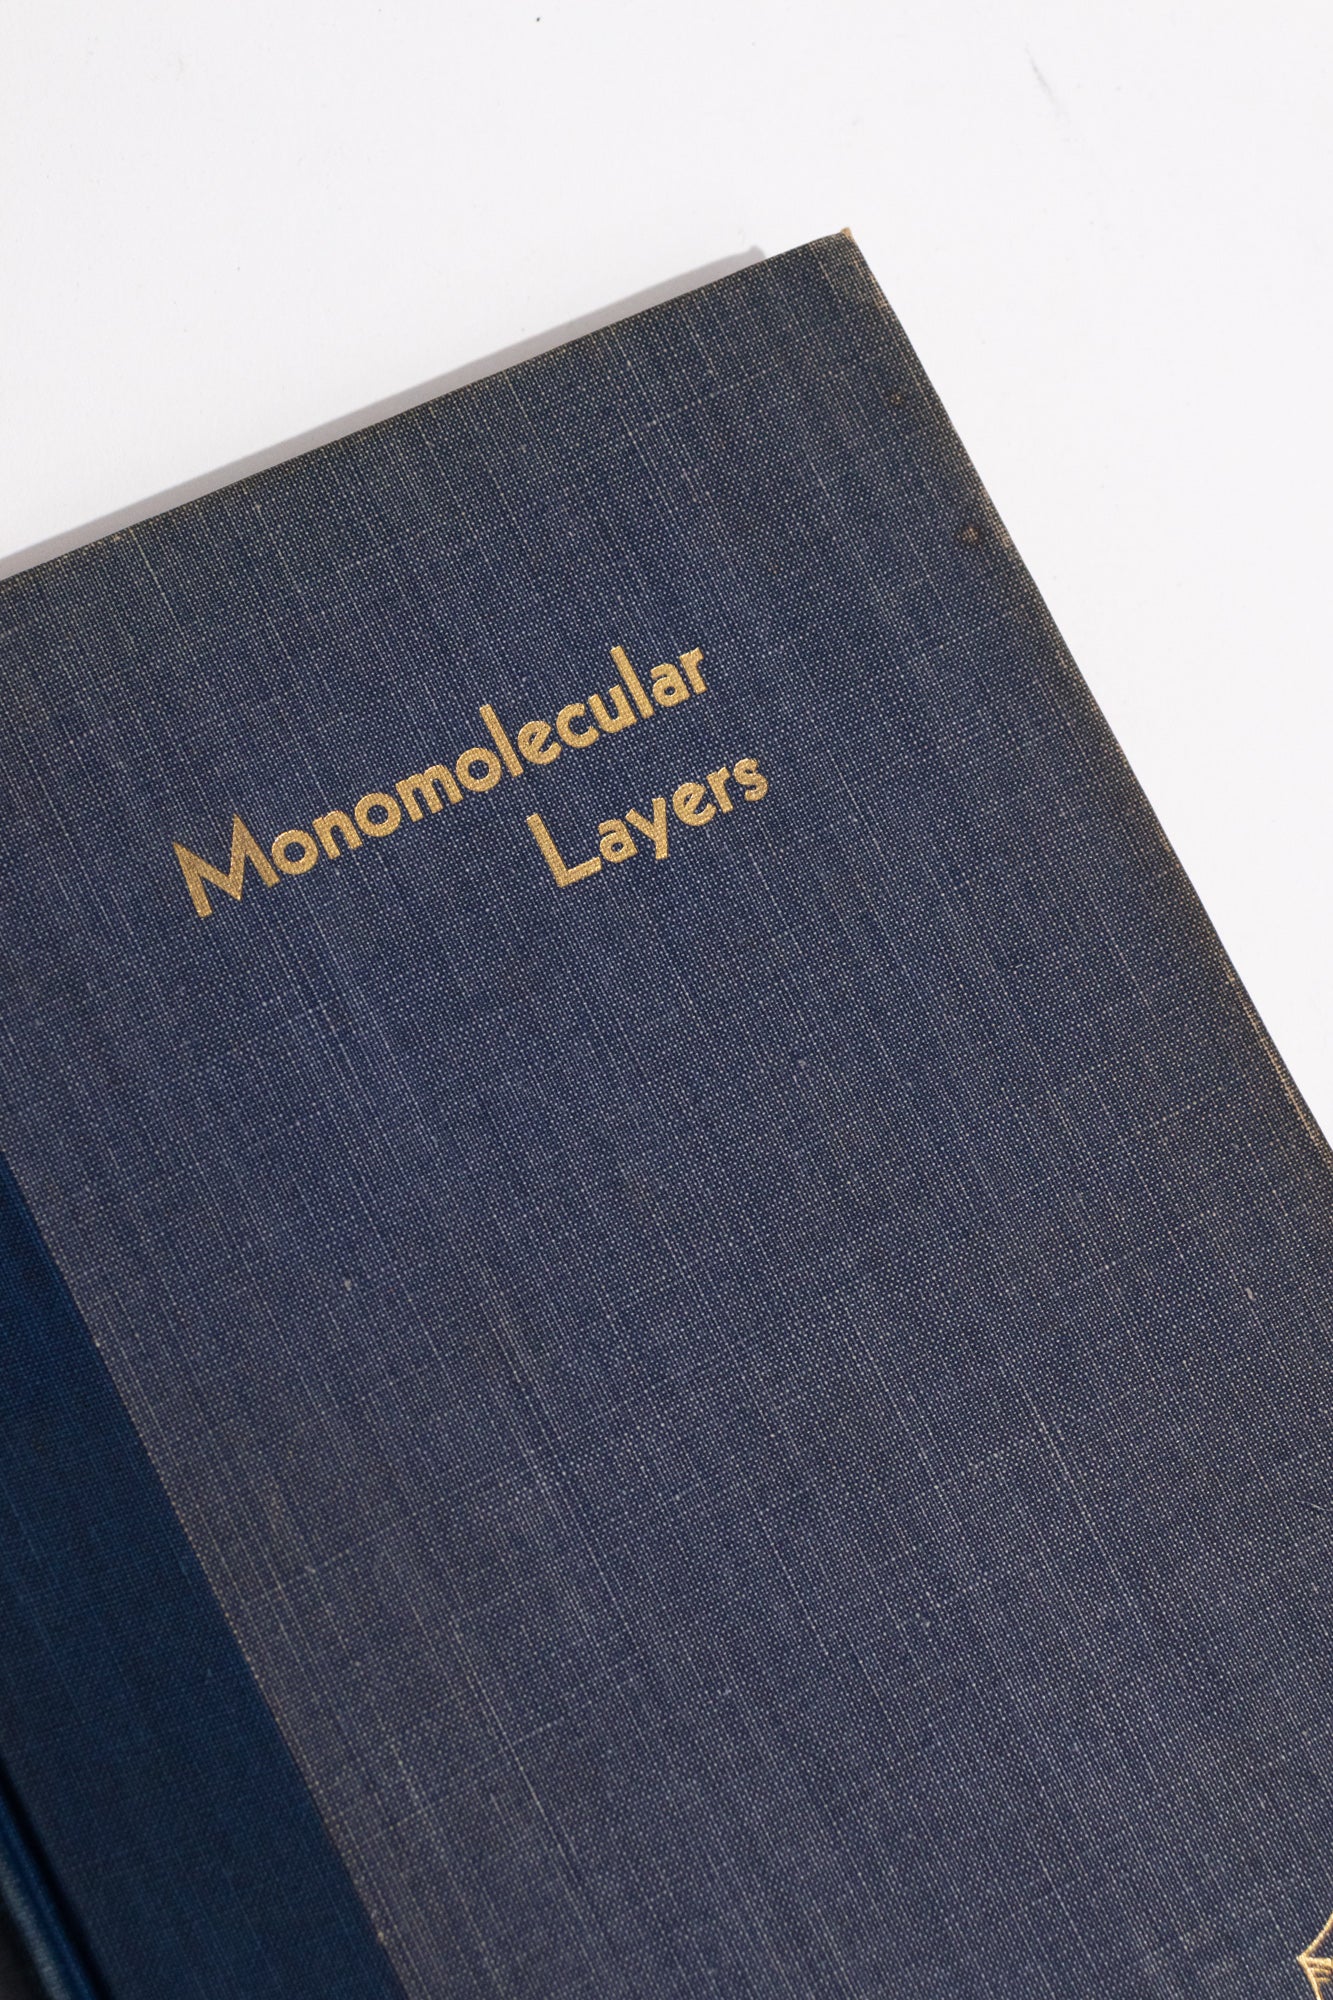 Monomolecular Layers - Stemcell Science Shop